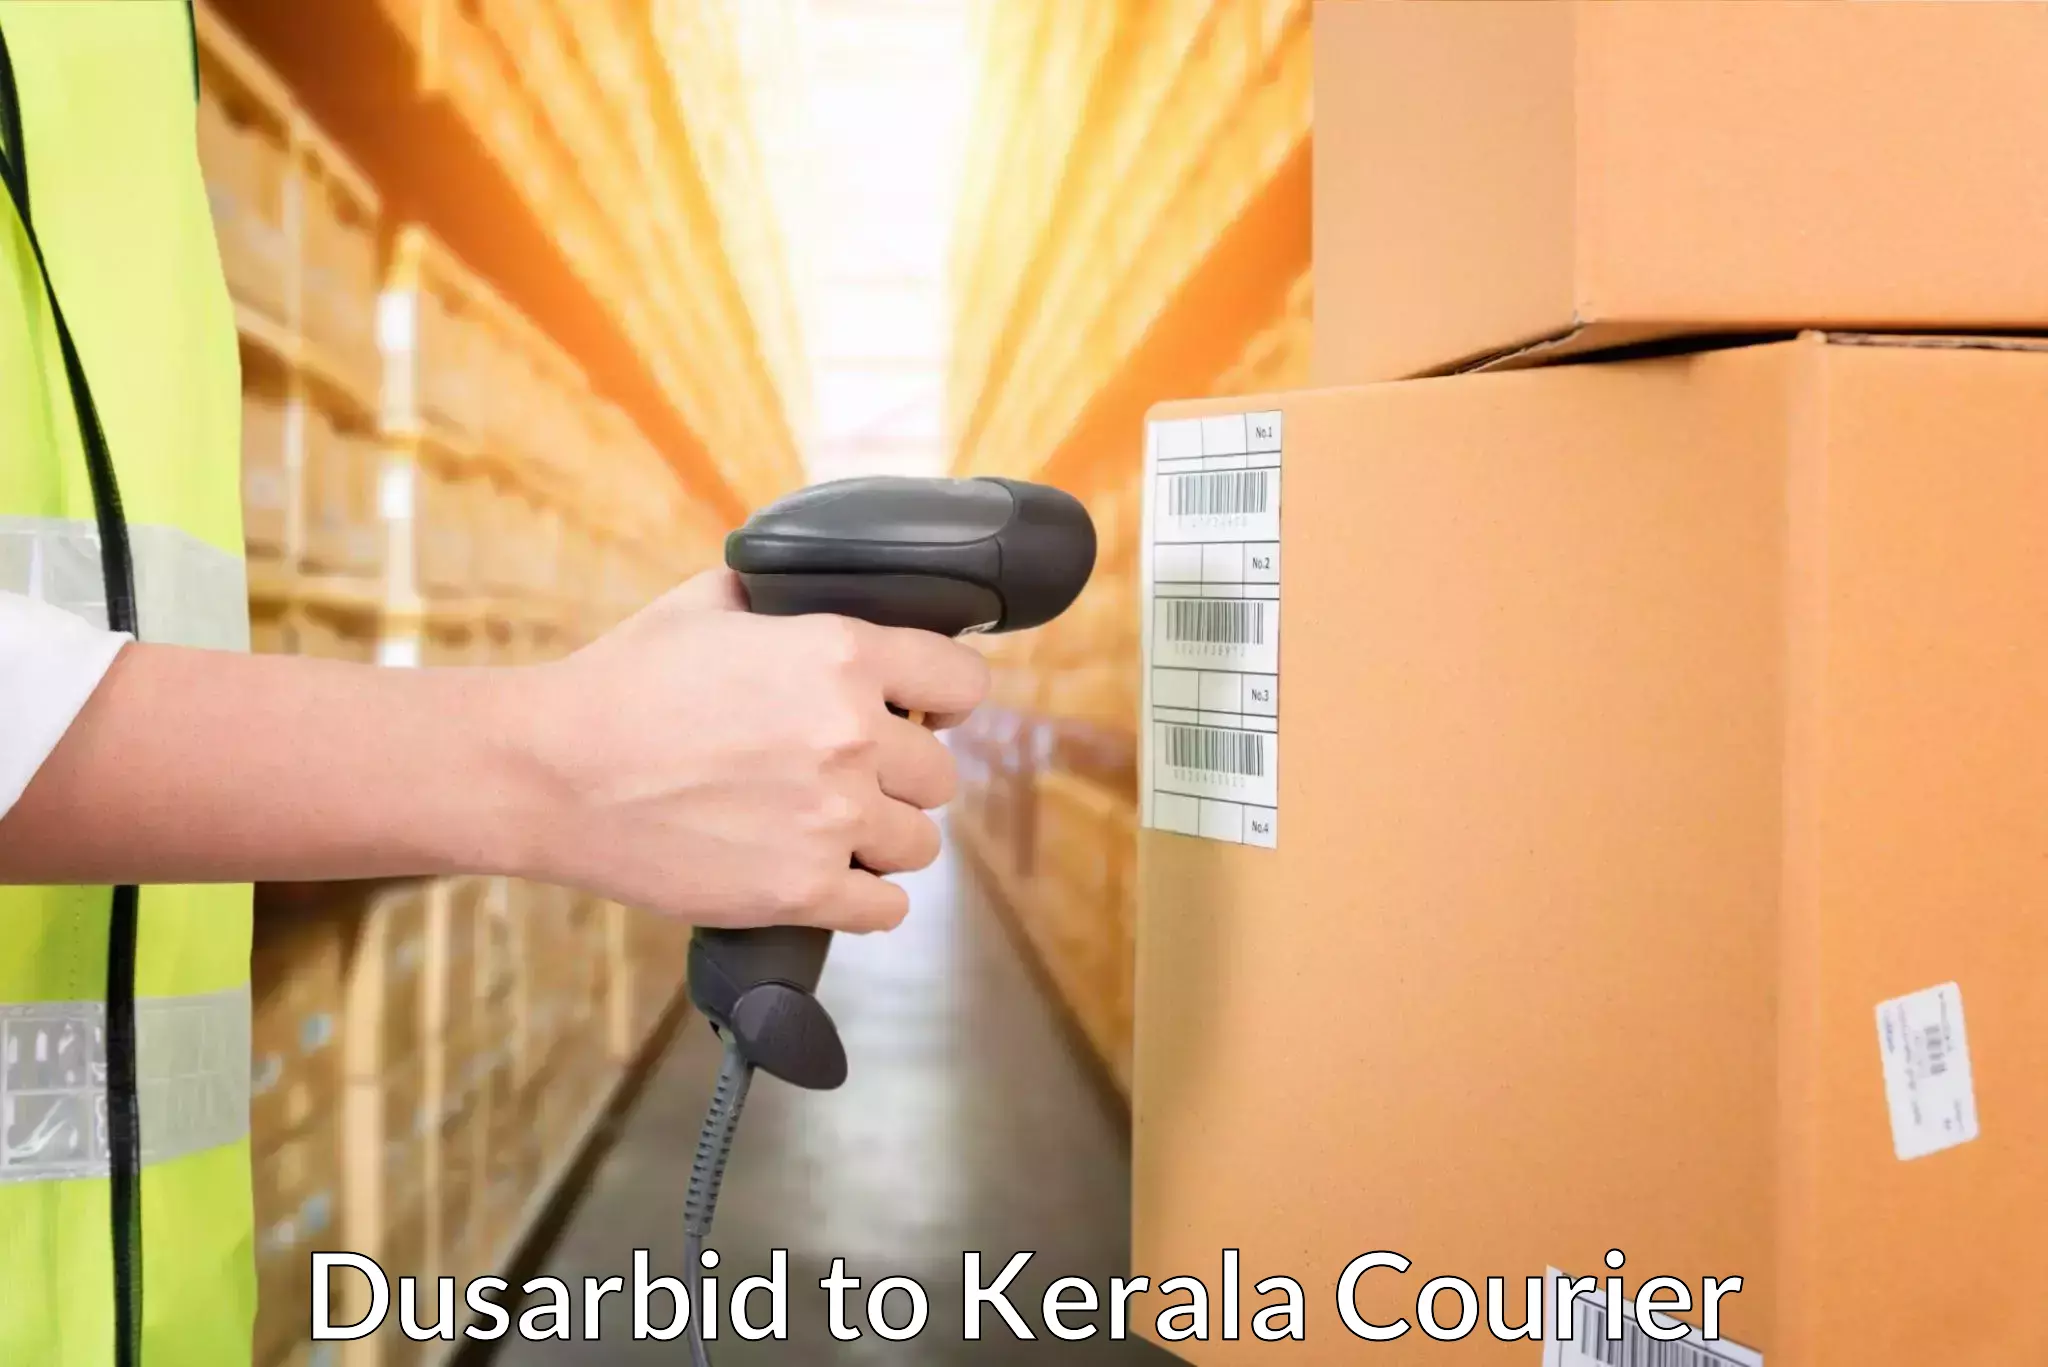 Courier app Dusarbid to Kerala